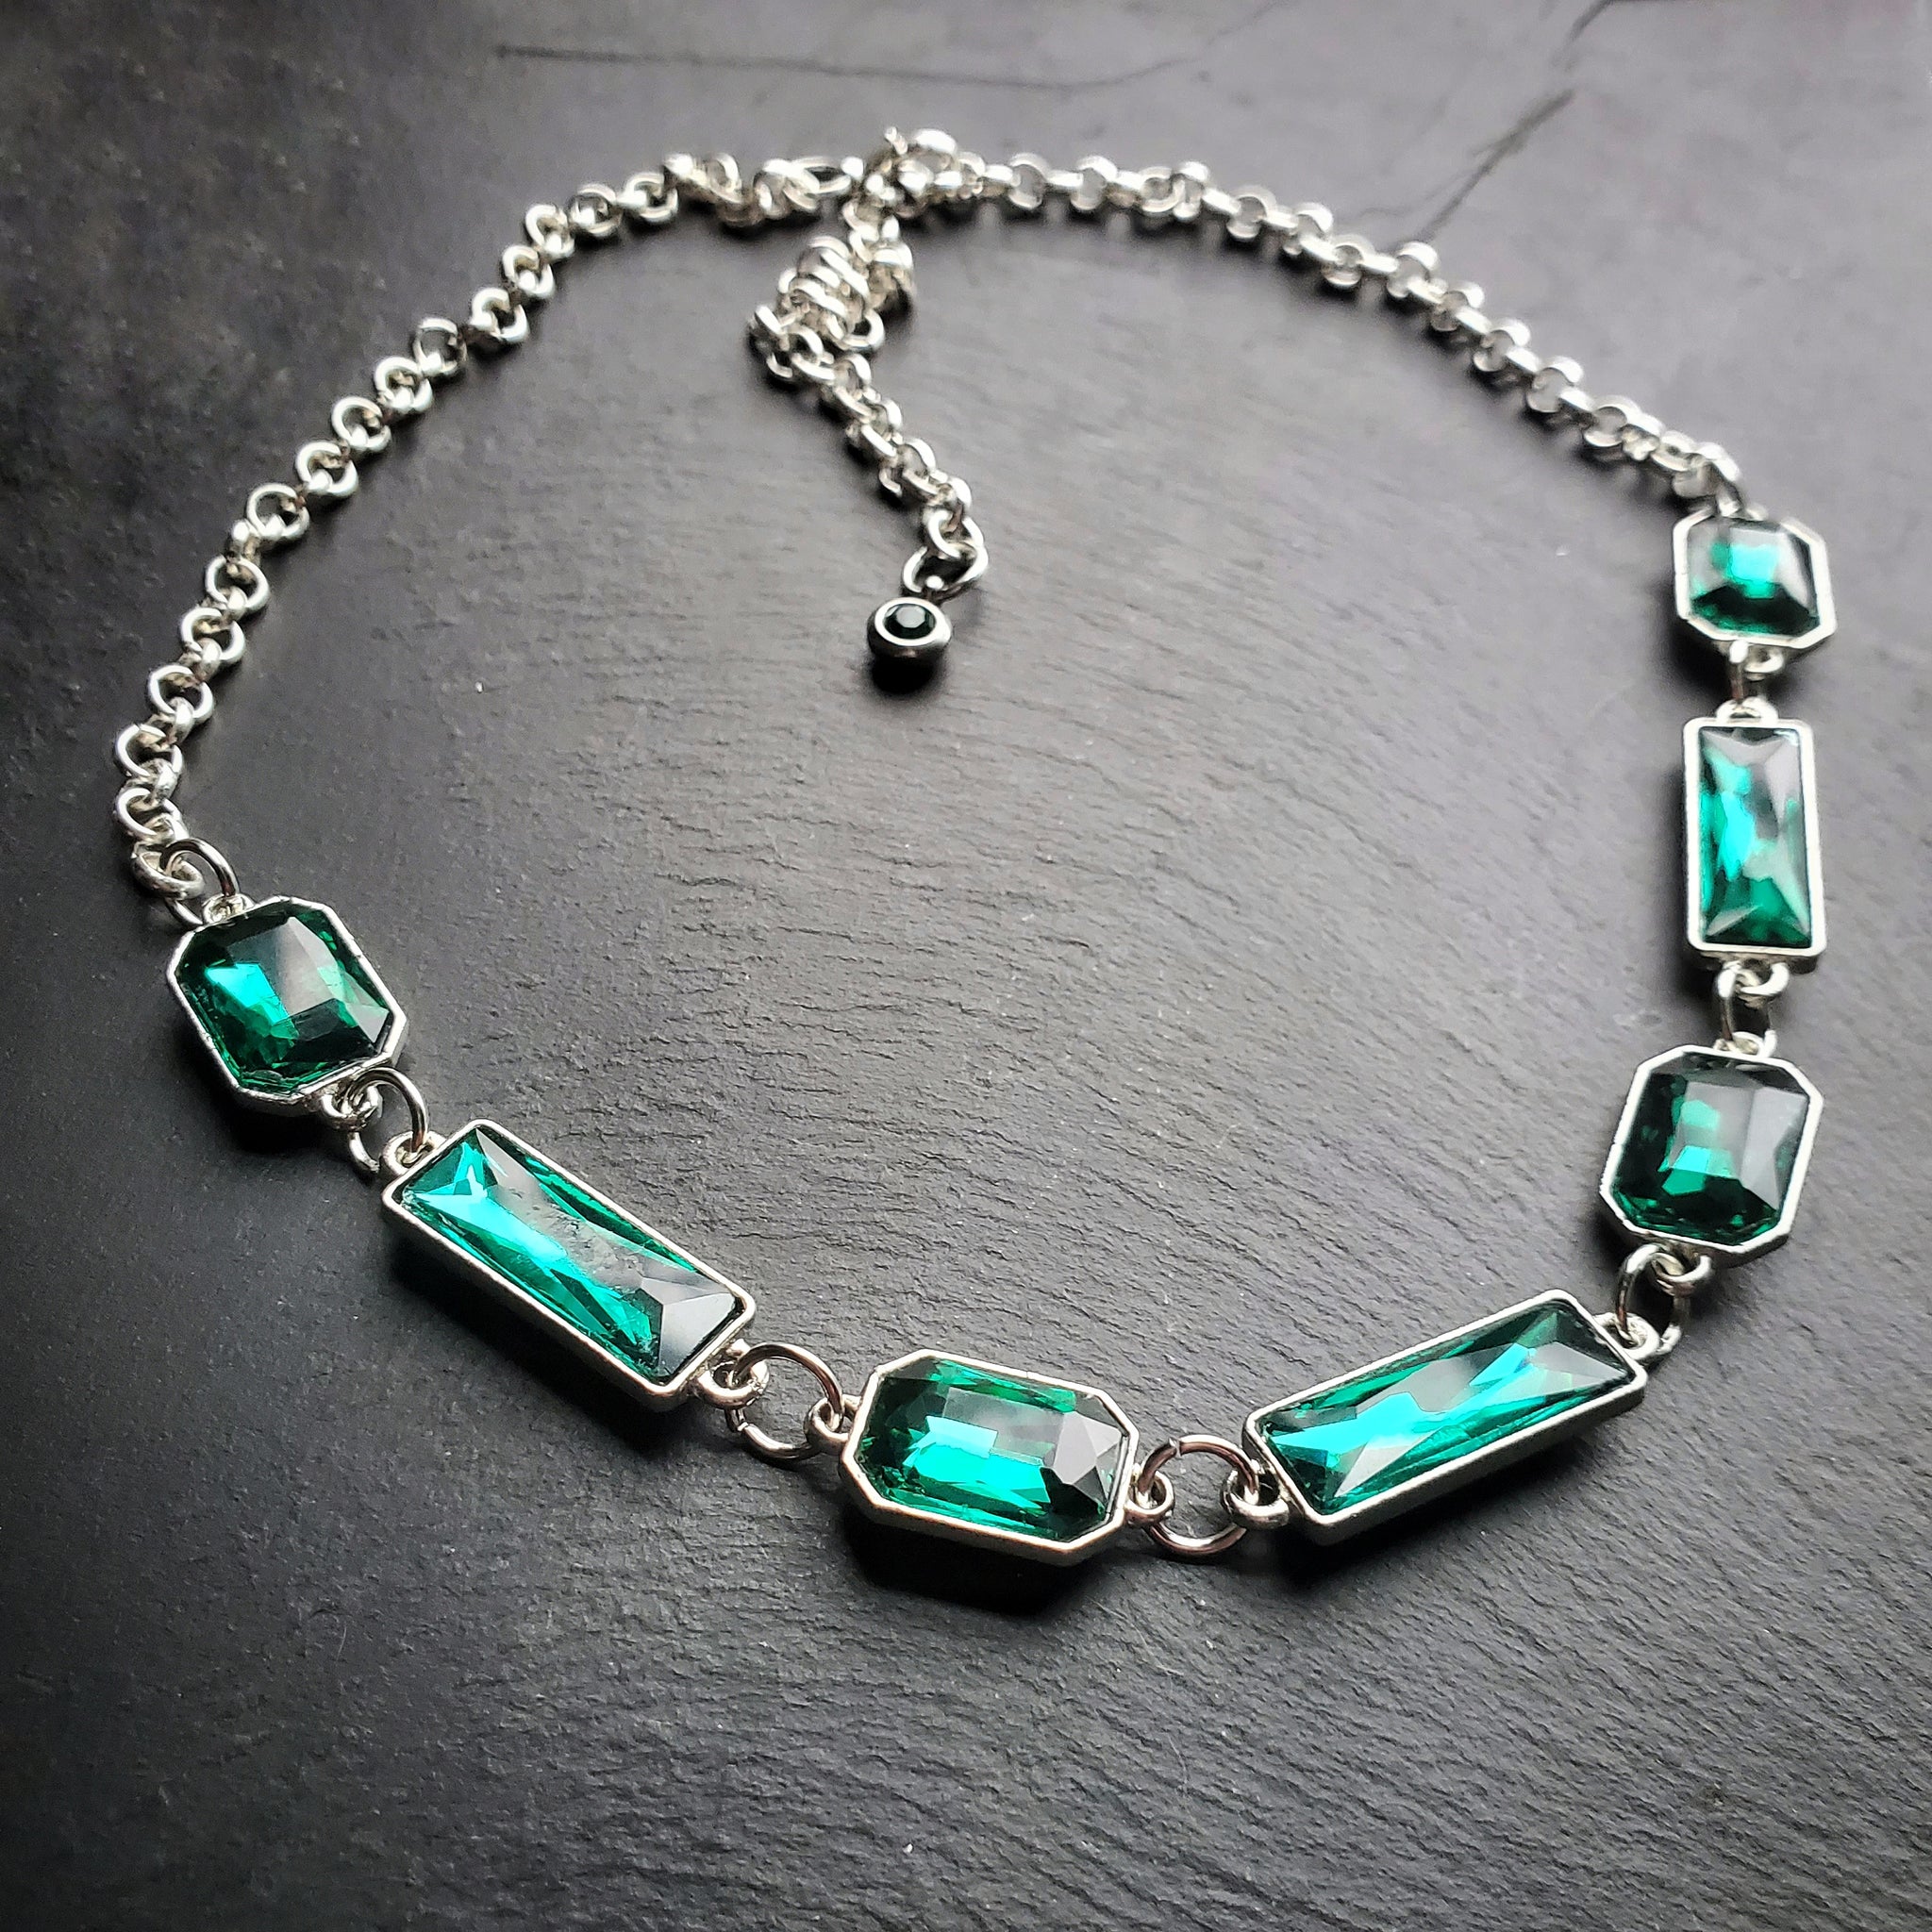 Emerald Cut Rhinestone Necklace in Green or Blue